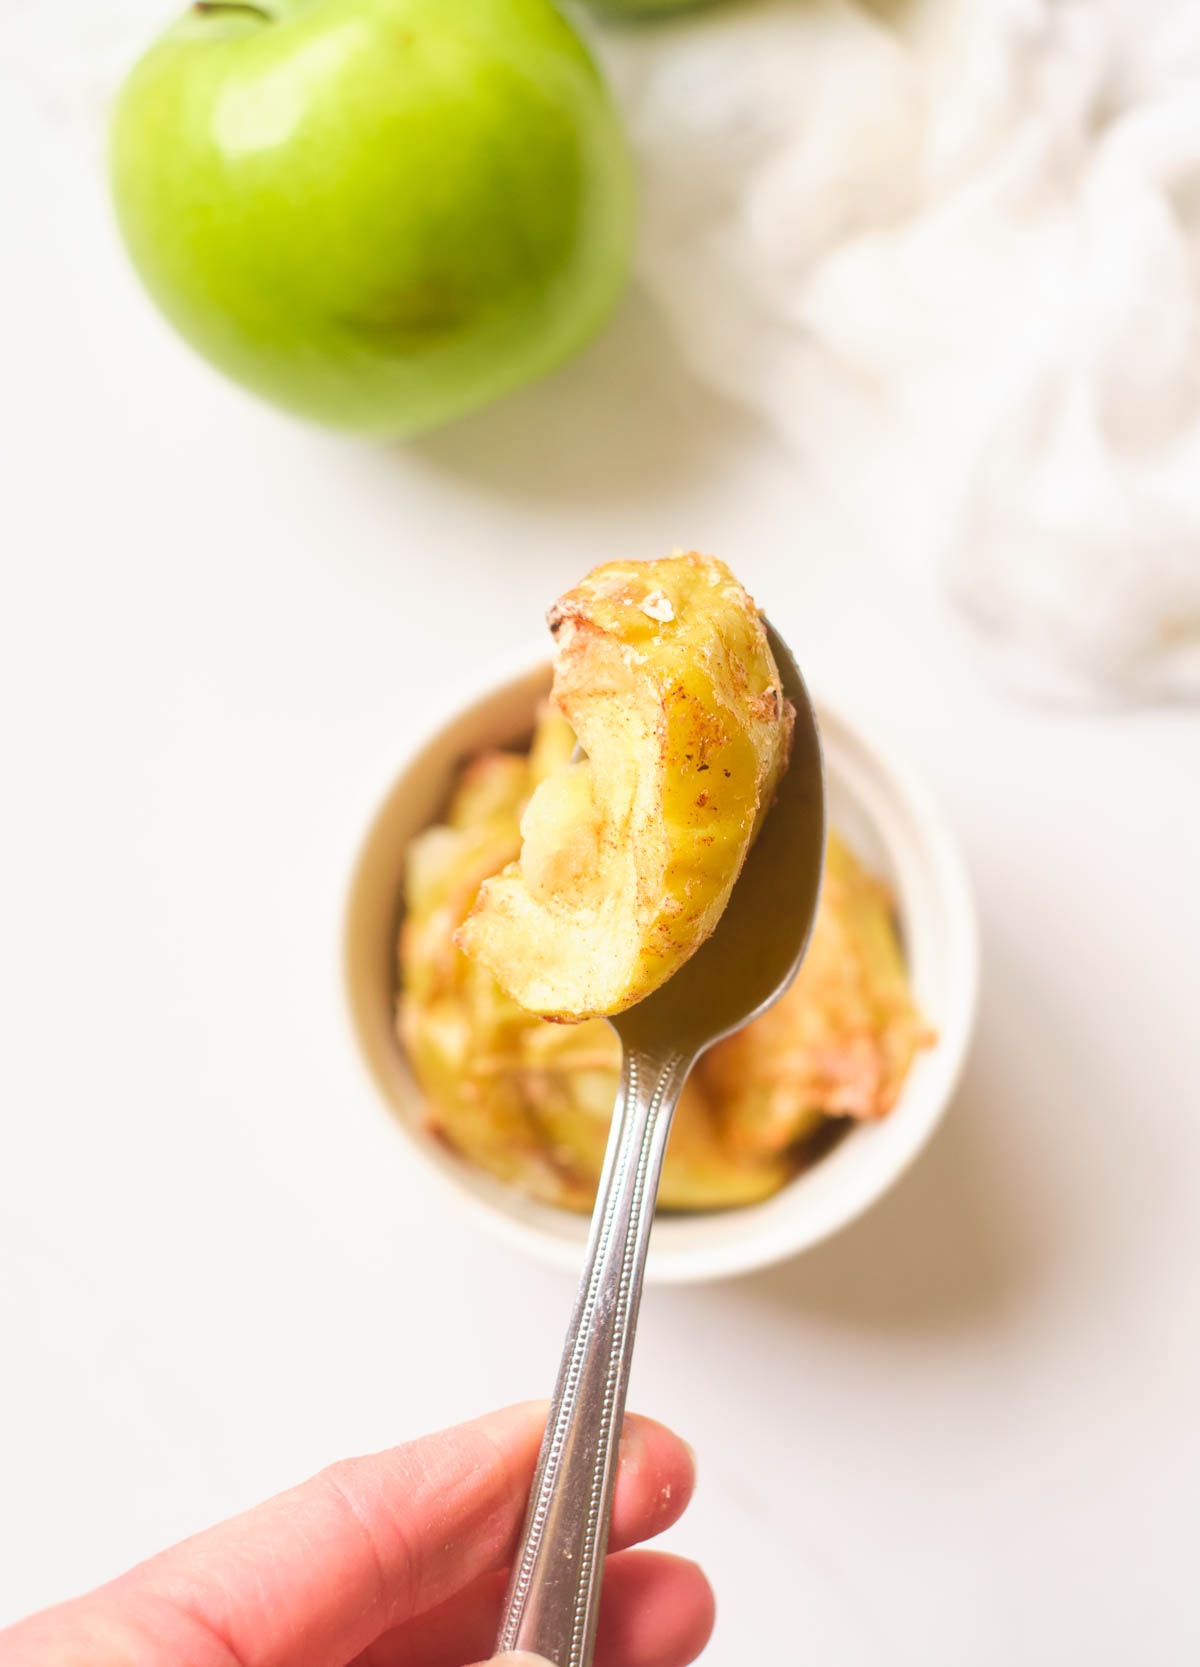 Spoon of baked air fryer apples held over ramekin filled with apple dessert.